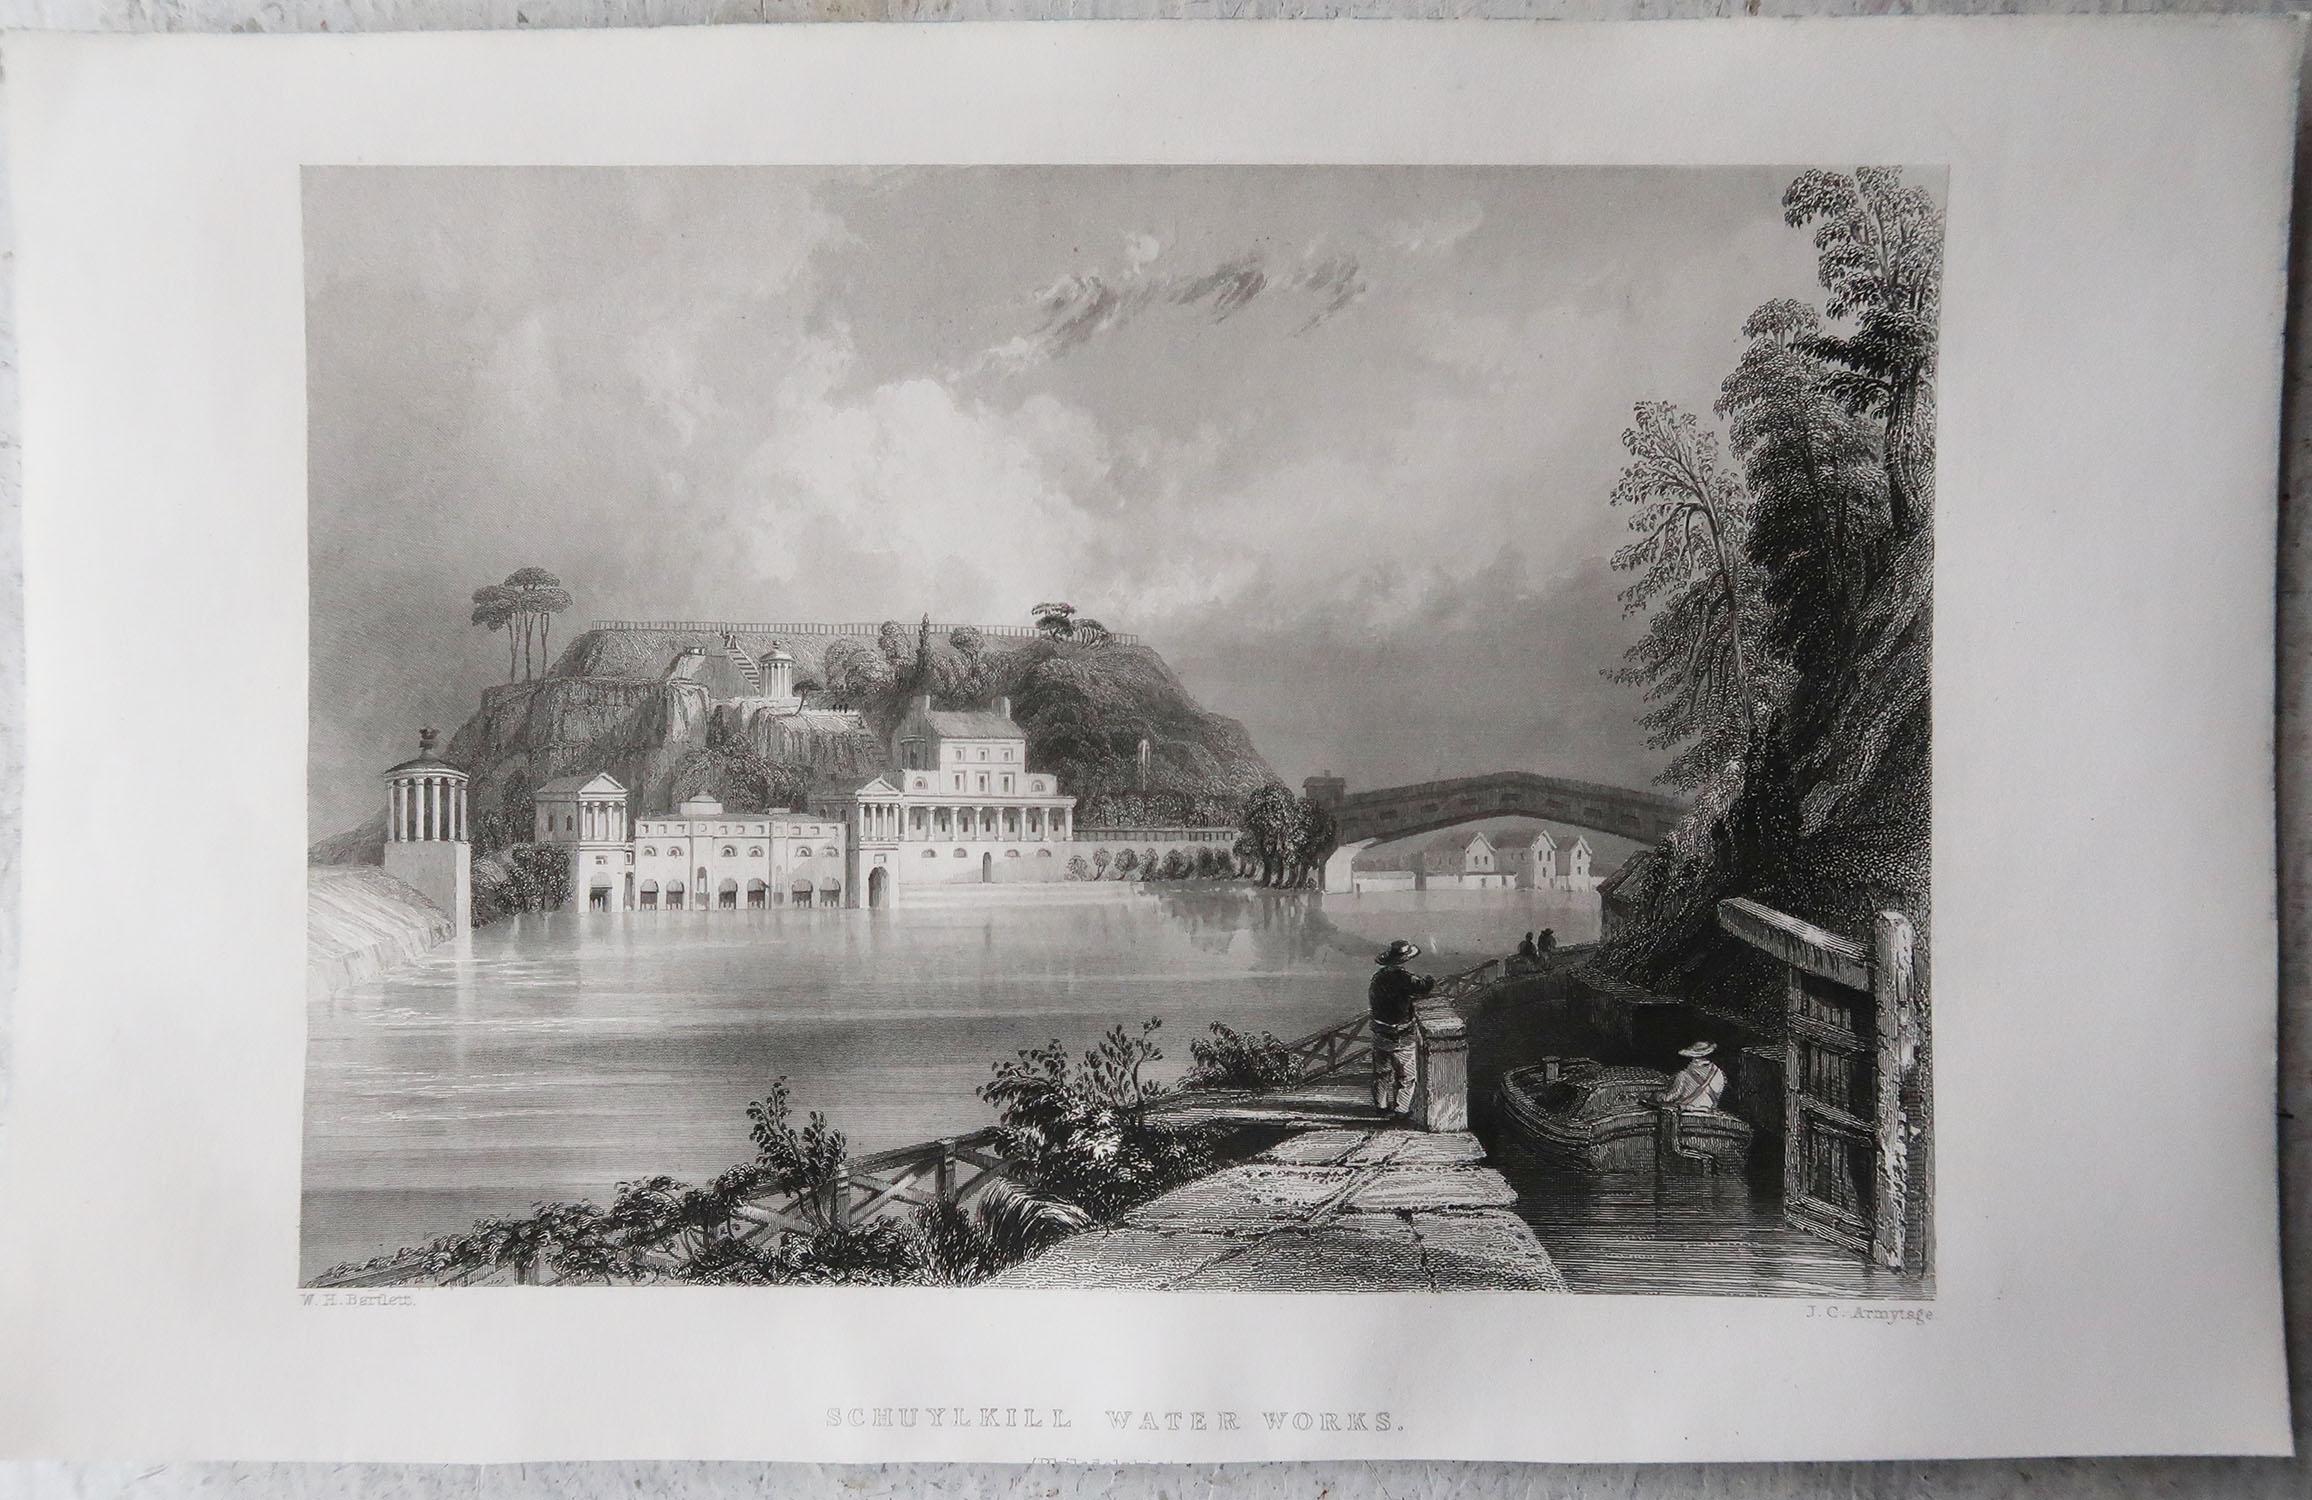 English Original Antique Print of Schuylkill Water-Works, Philadelphia, Pennsylvania